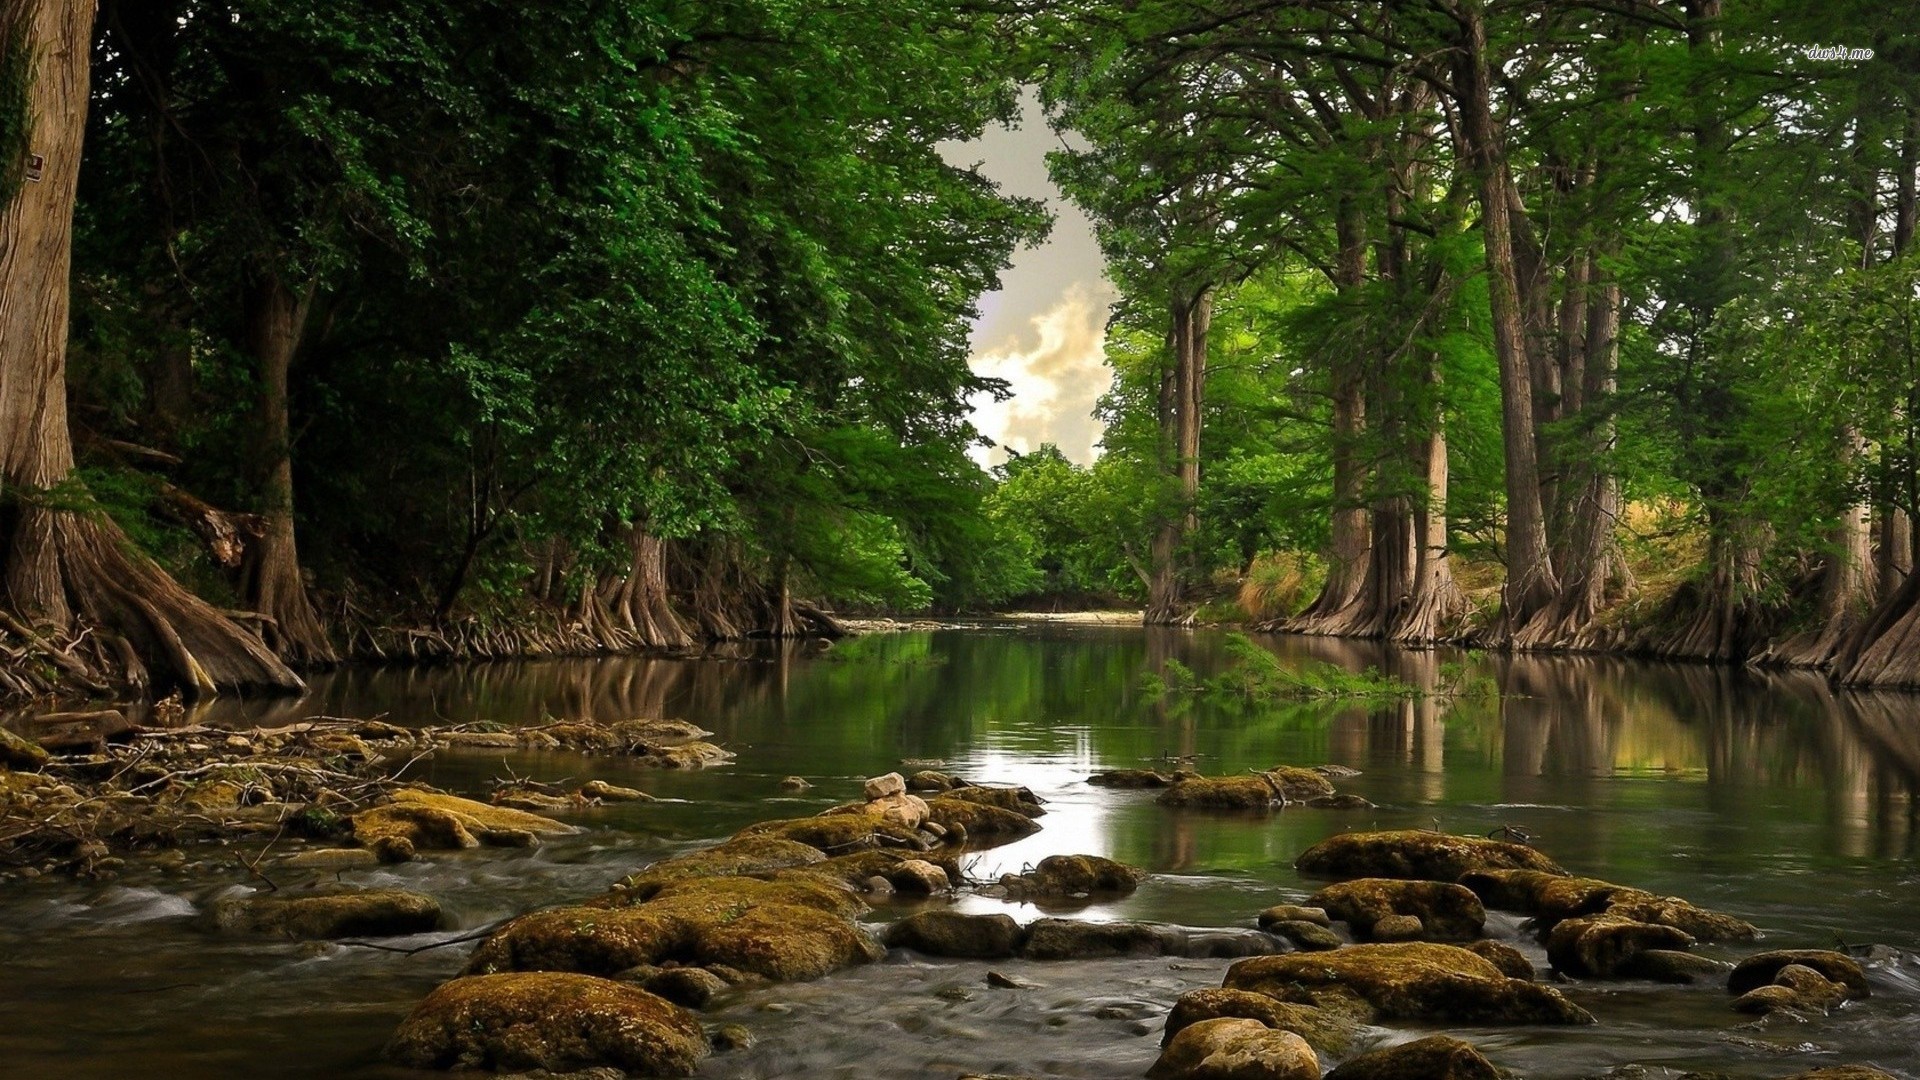 https://steemitimages.com/DQmXDohz21ywZgnFWZq7DPcZdKxWuptqL9HbXoJ7vMPcZyv/370623-forest-river-amazing-wallpaper.jpg